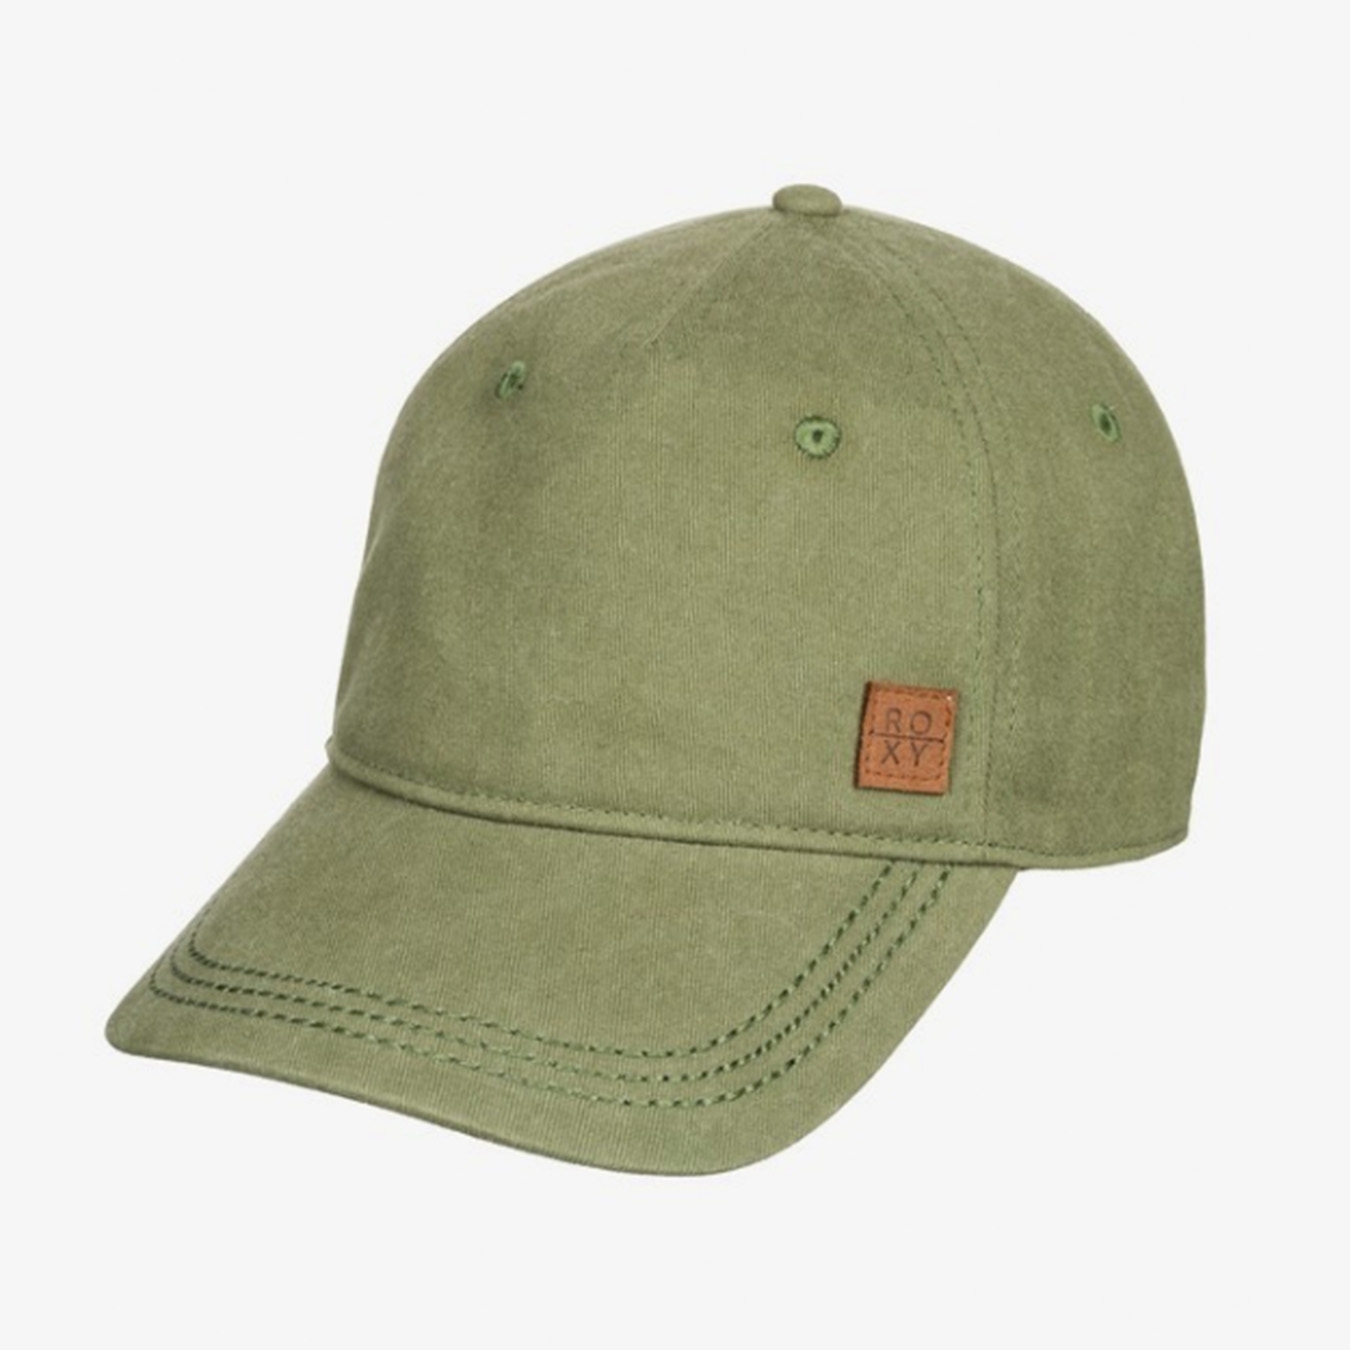 Extra Innings Baseball Hat